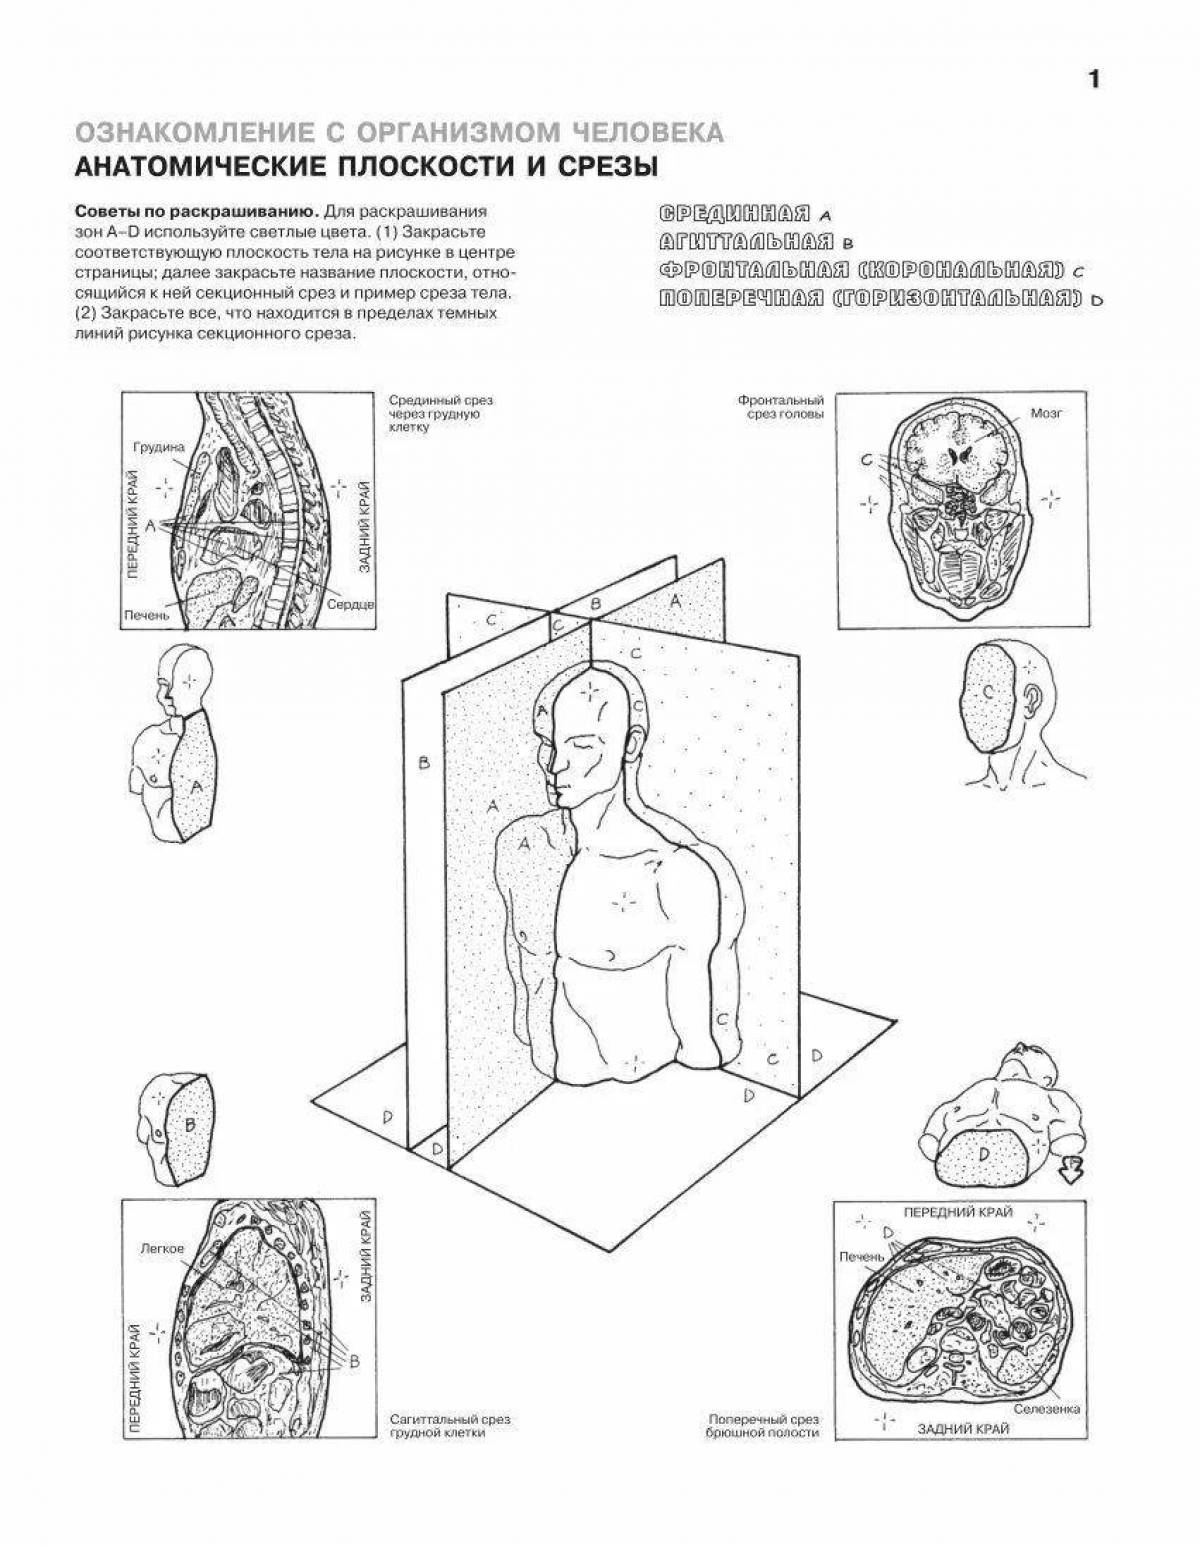 Radiant coloring atlas of human anatomy winn